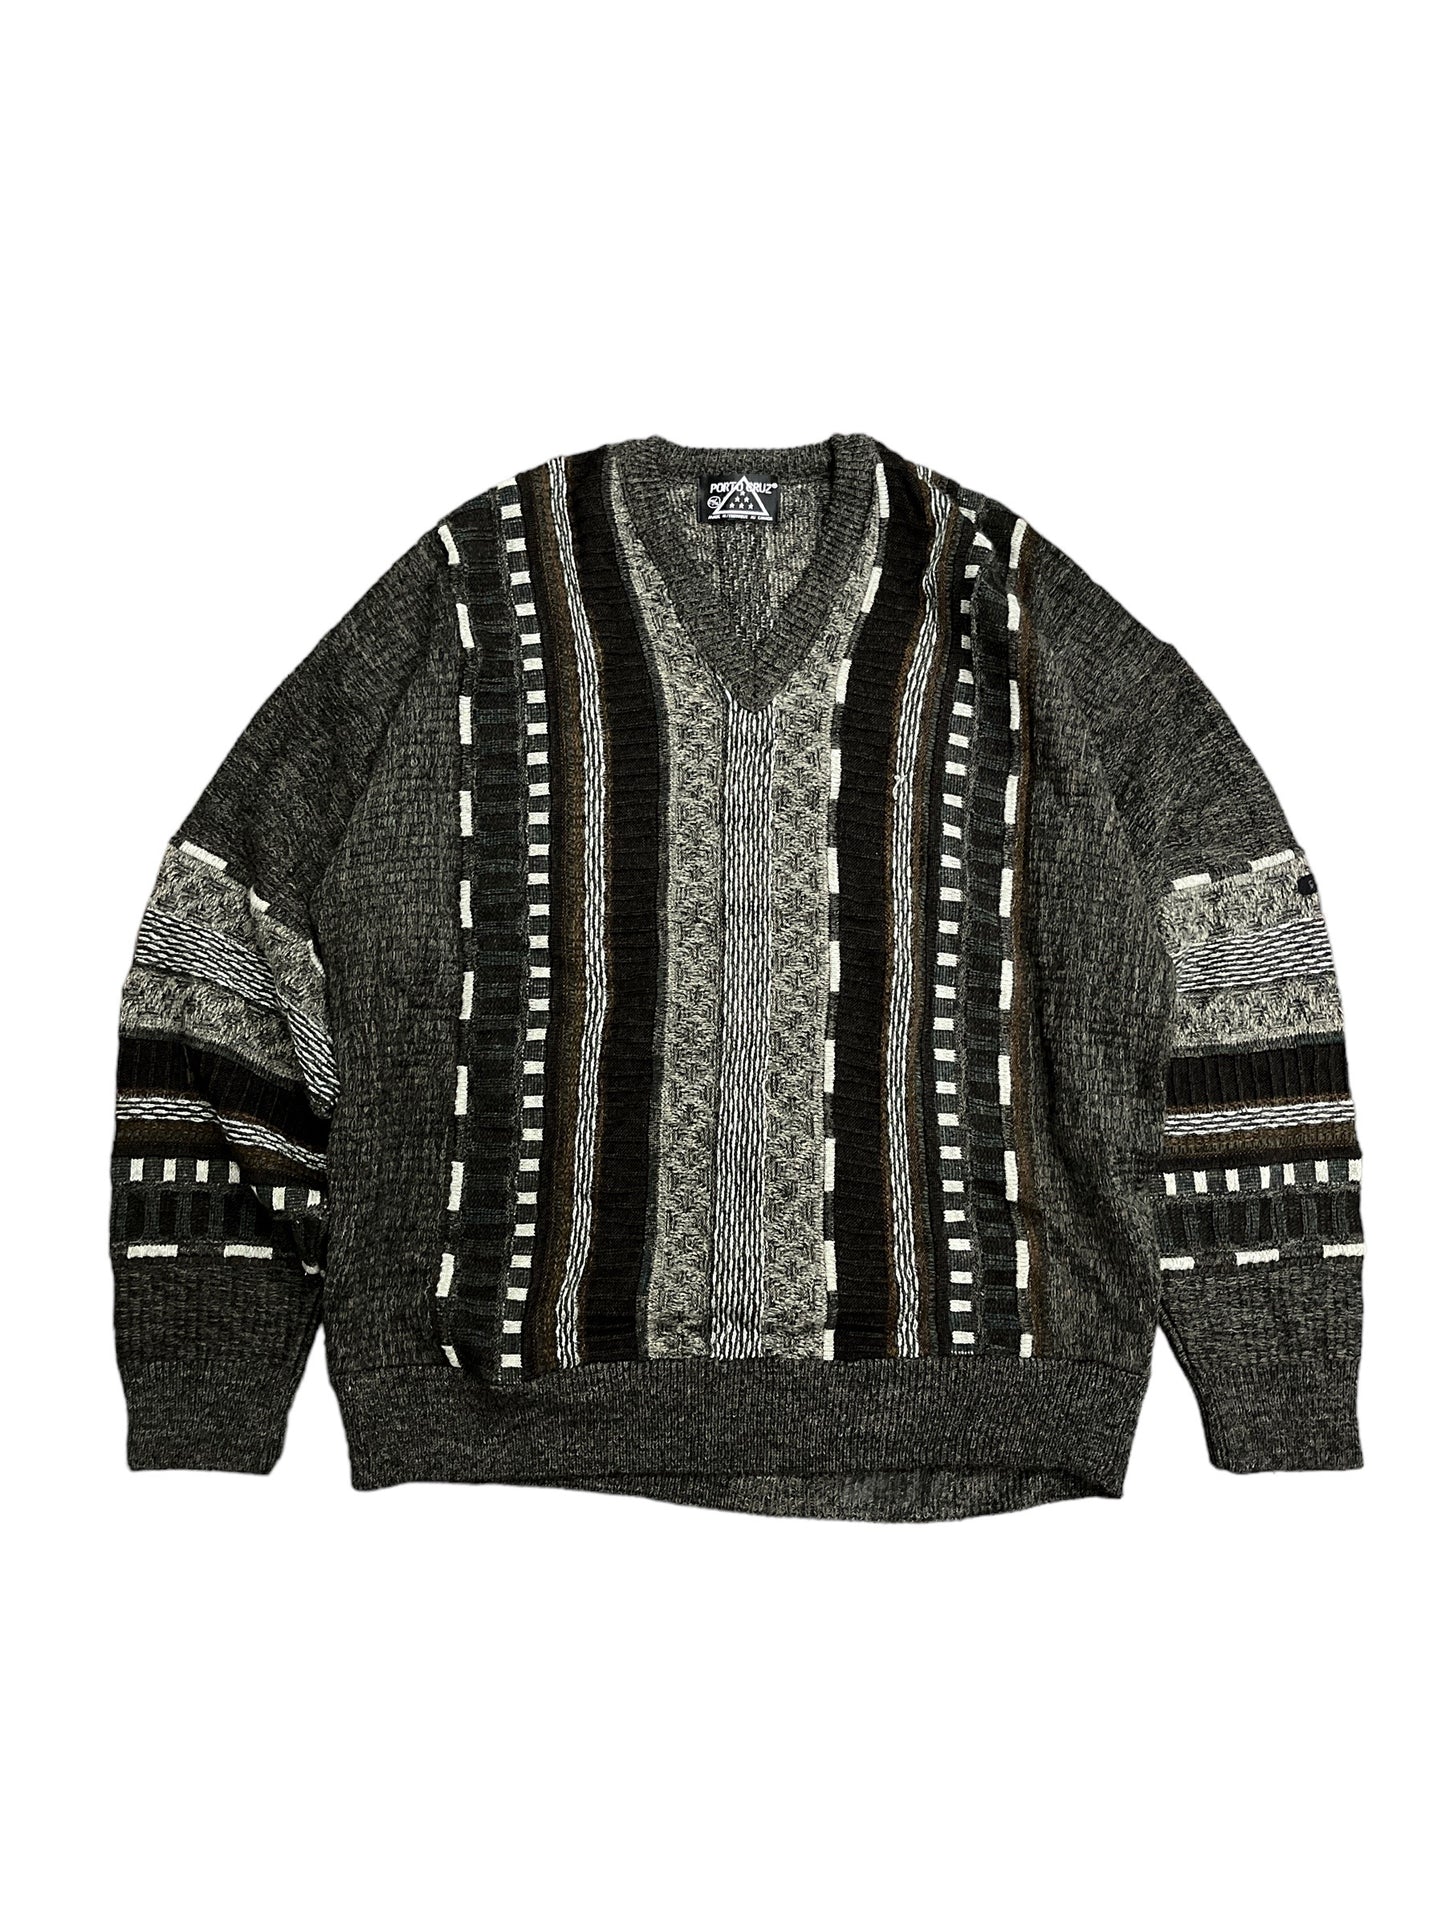 Vintage "Porto Cruz" Knit Sweater